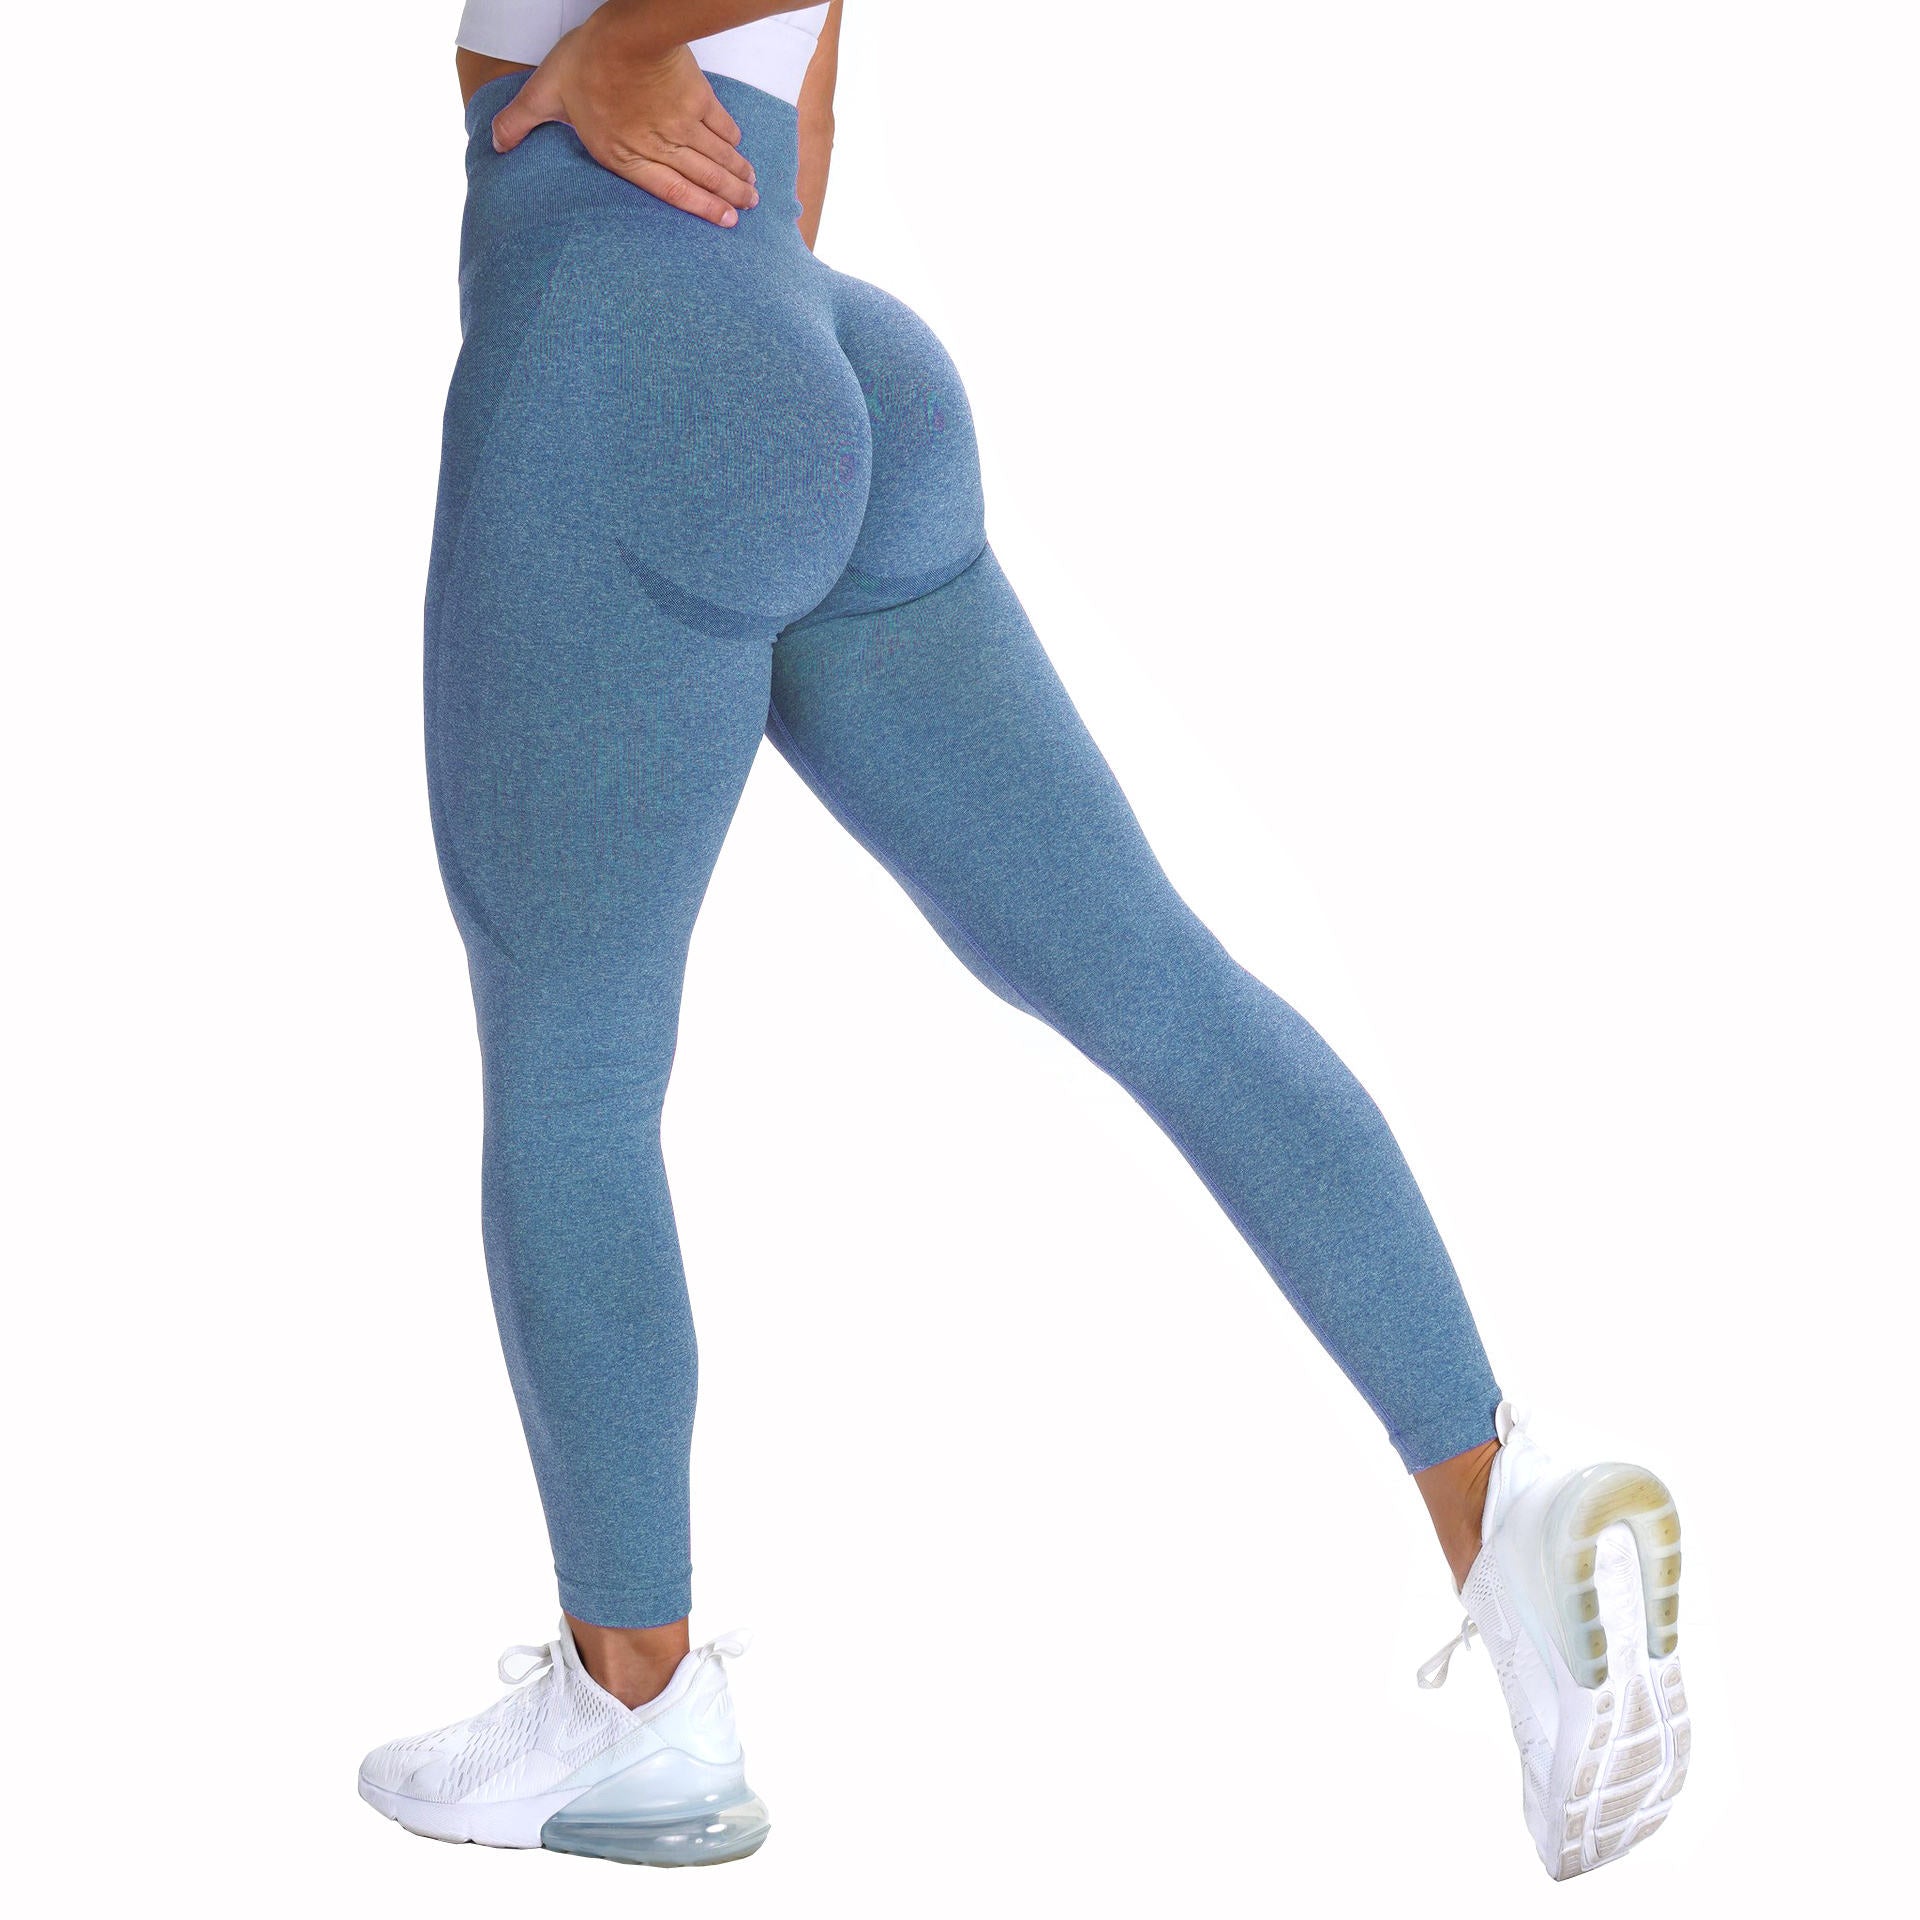 Cotton Yoga Pants External Penetration Tight pants High Waist Pants Women